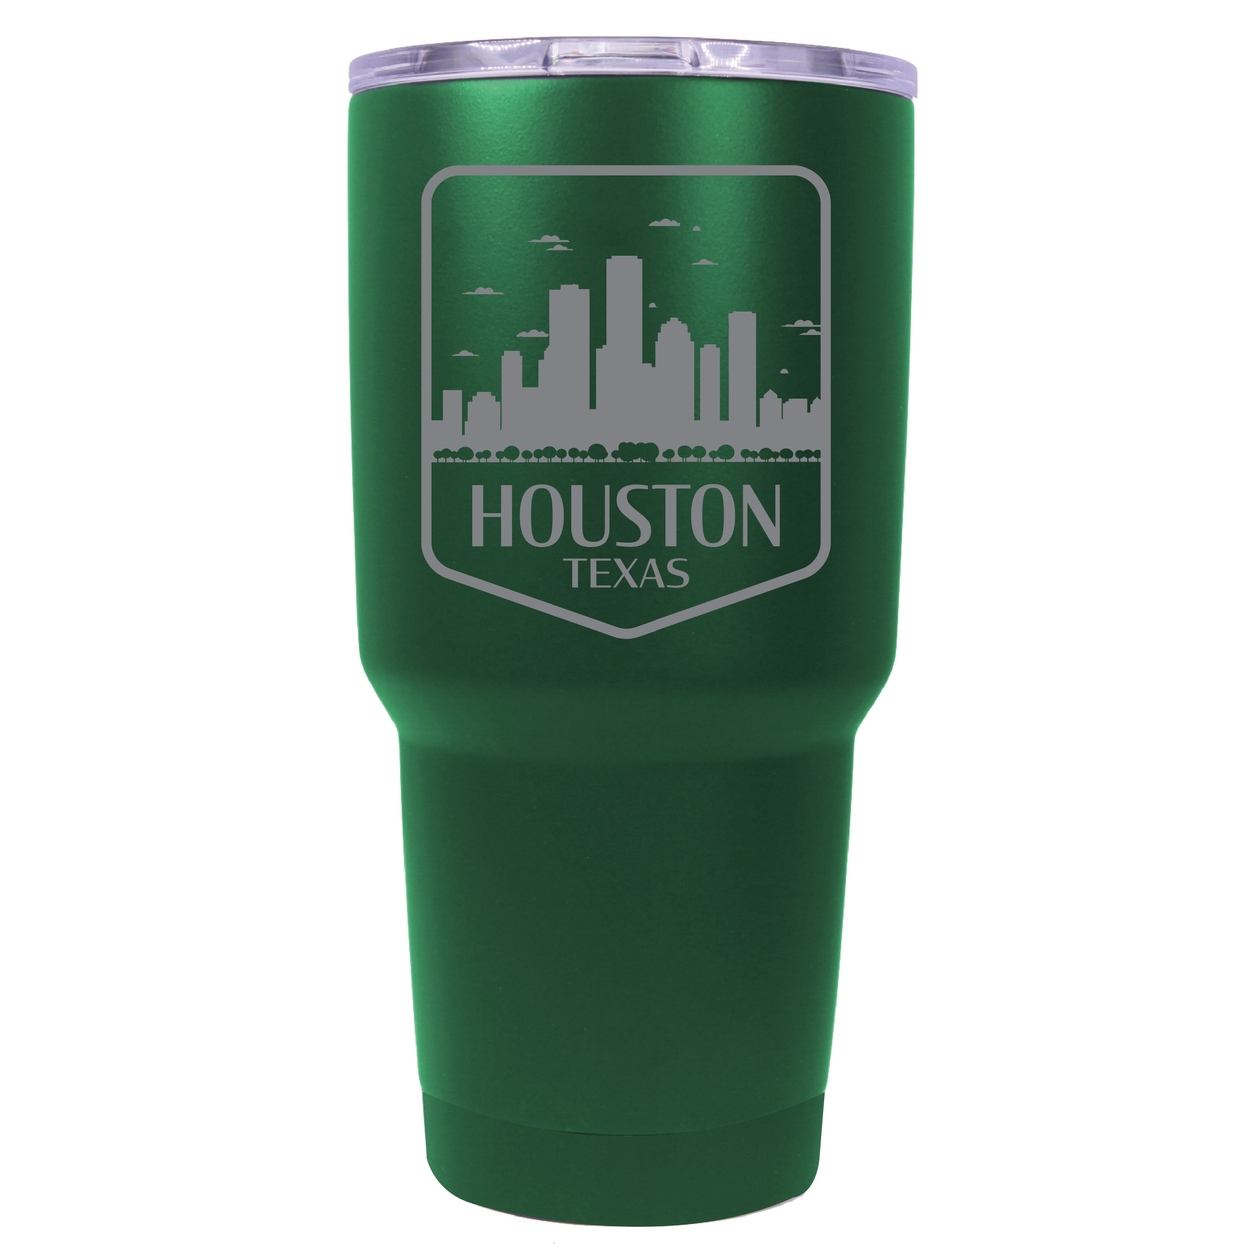 Houston Texas Souvenir 24 Oz Engraved Insulated Stainless Steel Tumbler - Green,,2-Pack